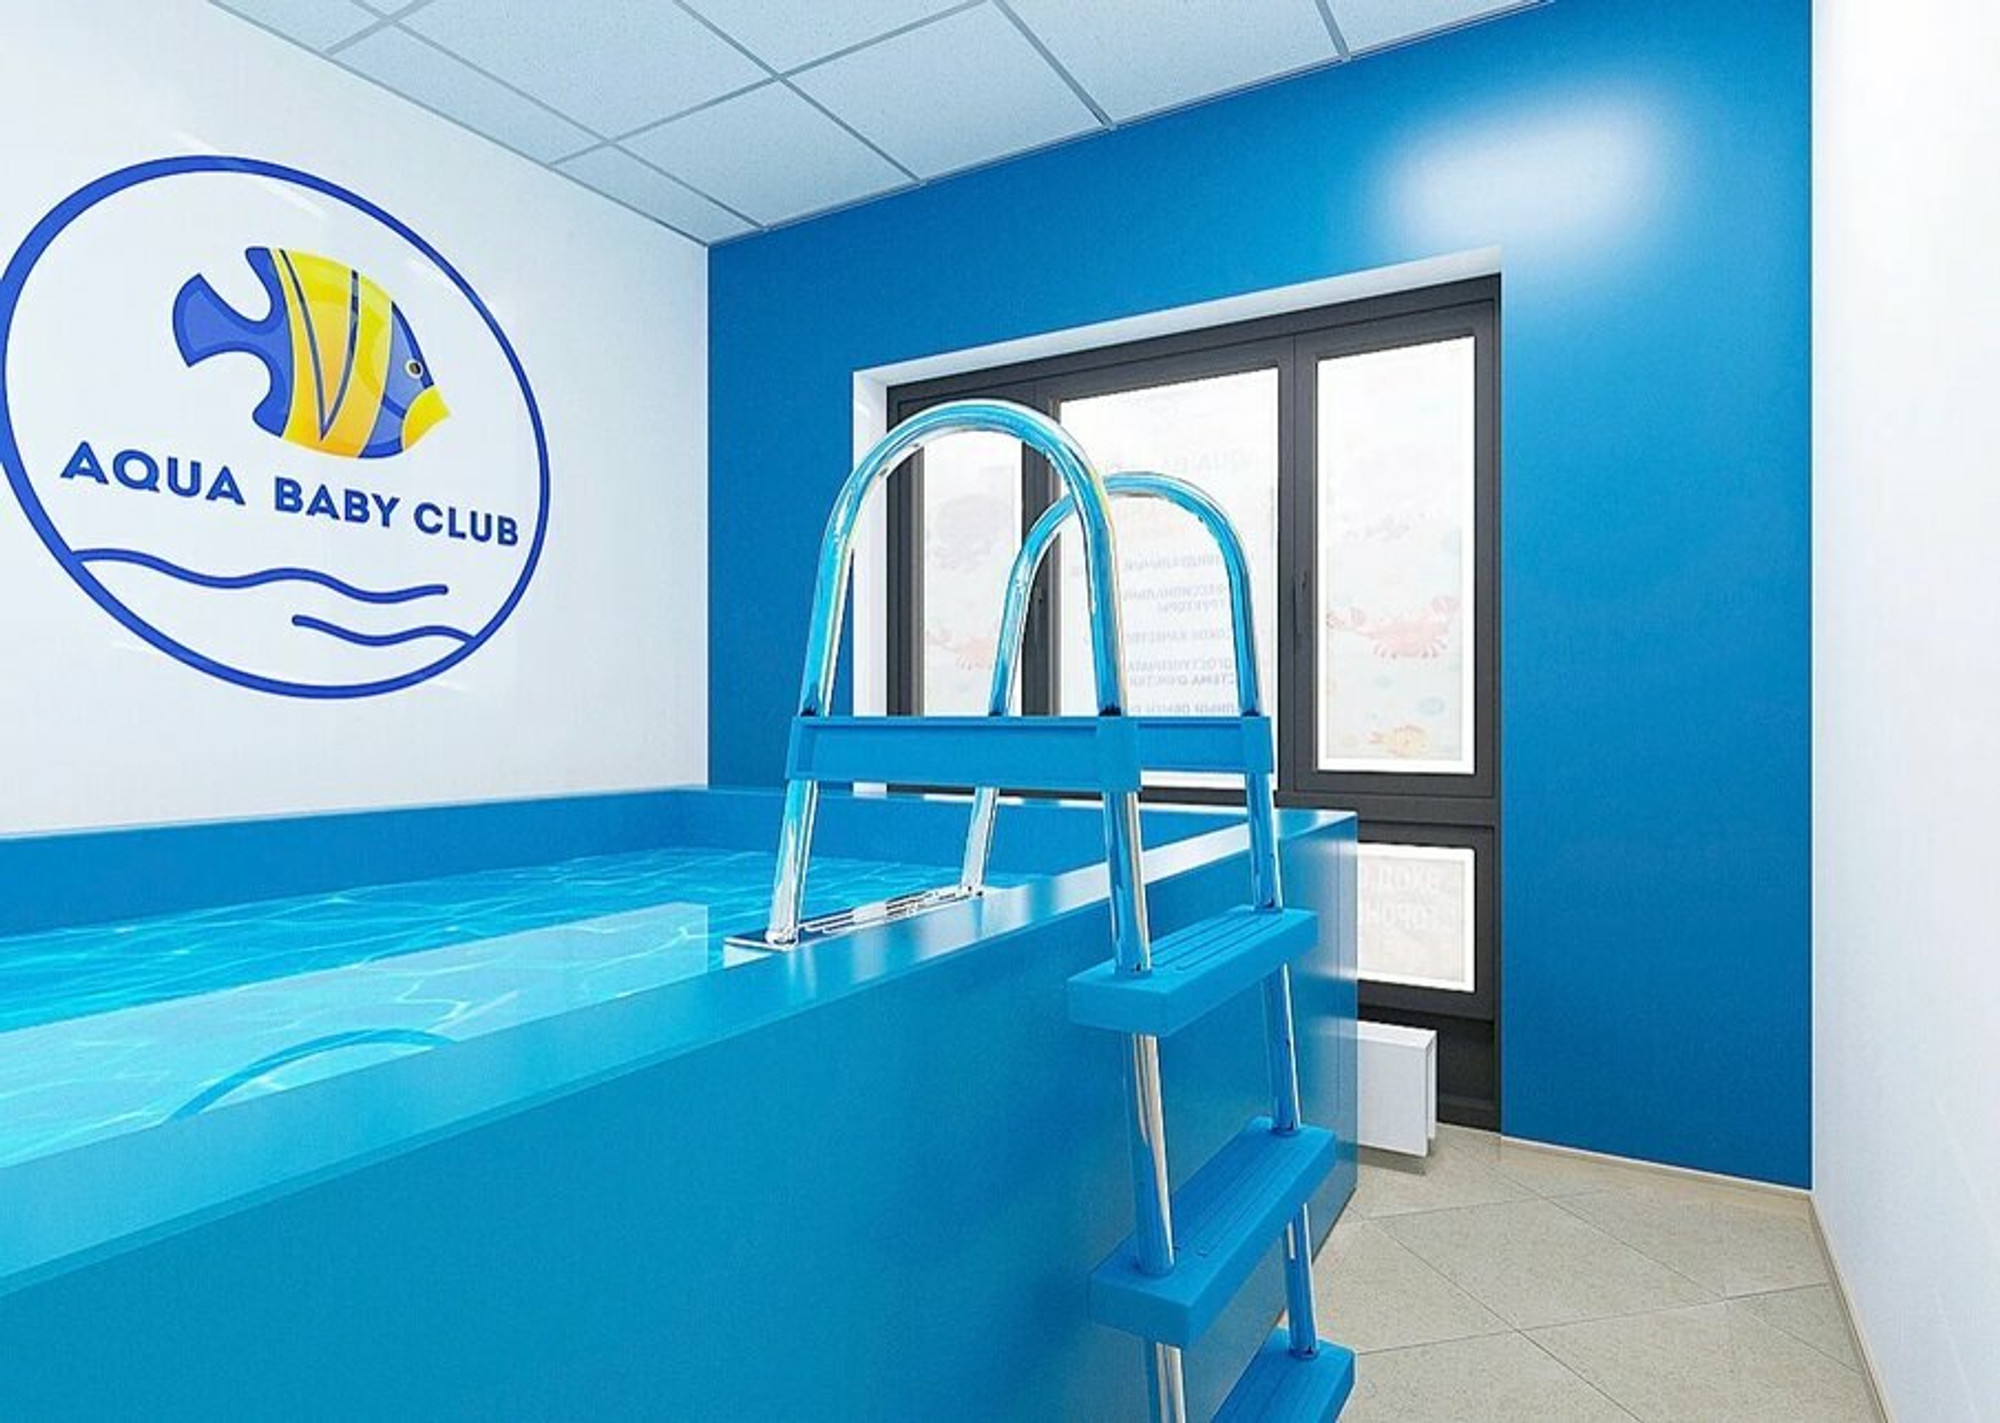 Aqua Baby Club (Бассейн )